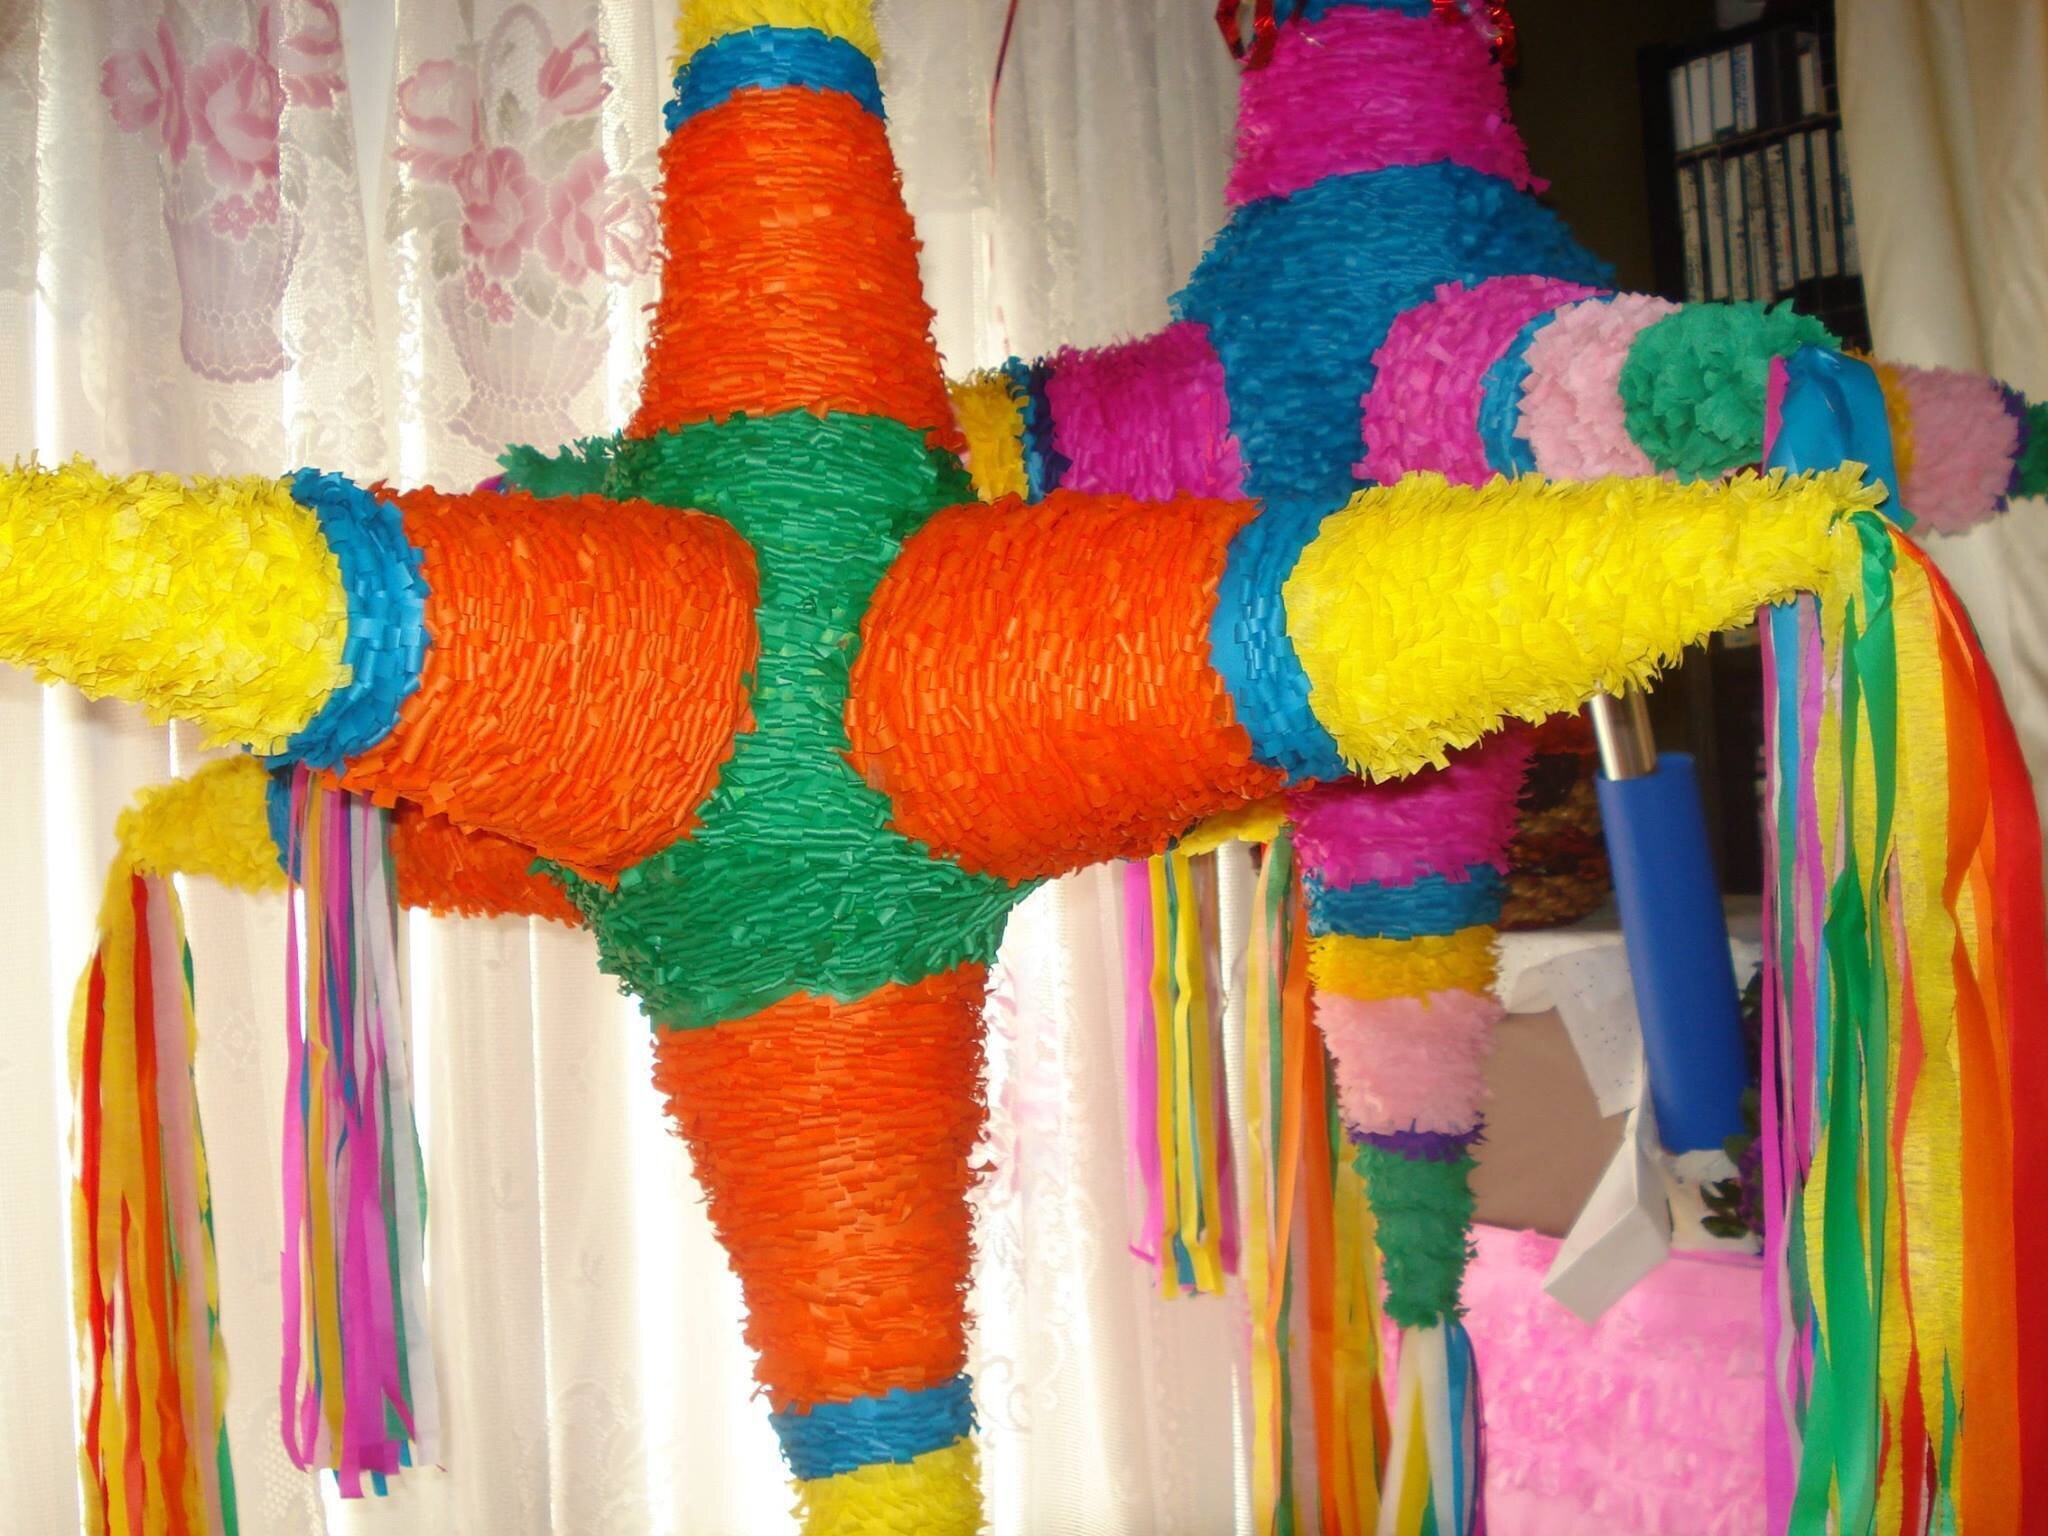 Traditional Mexican piñatas made by Mary Coronado, 59.